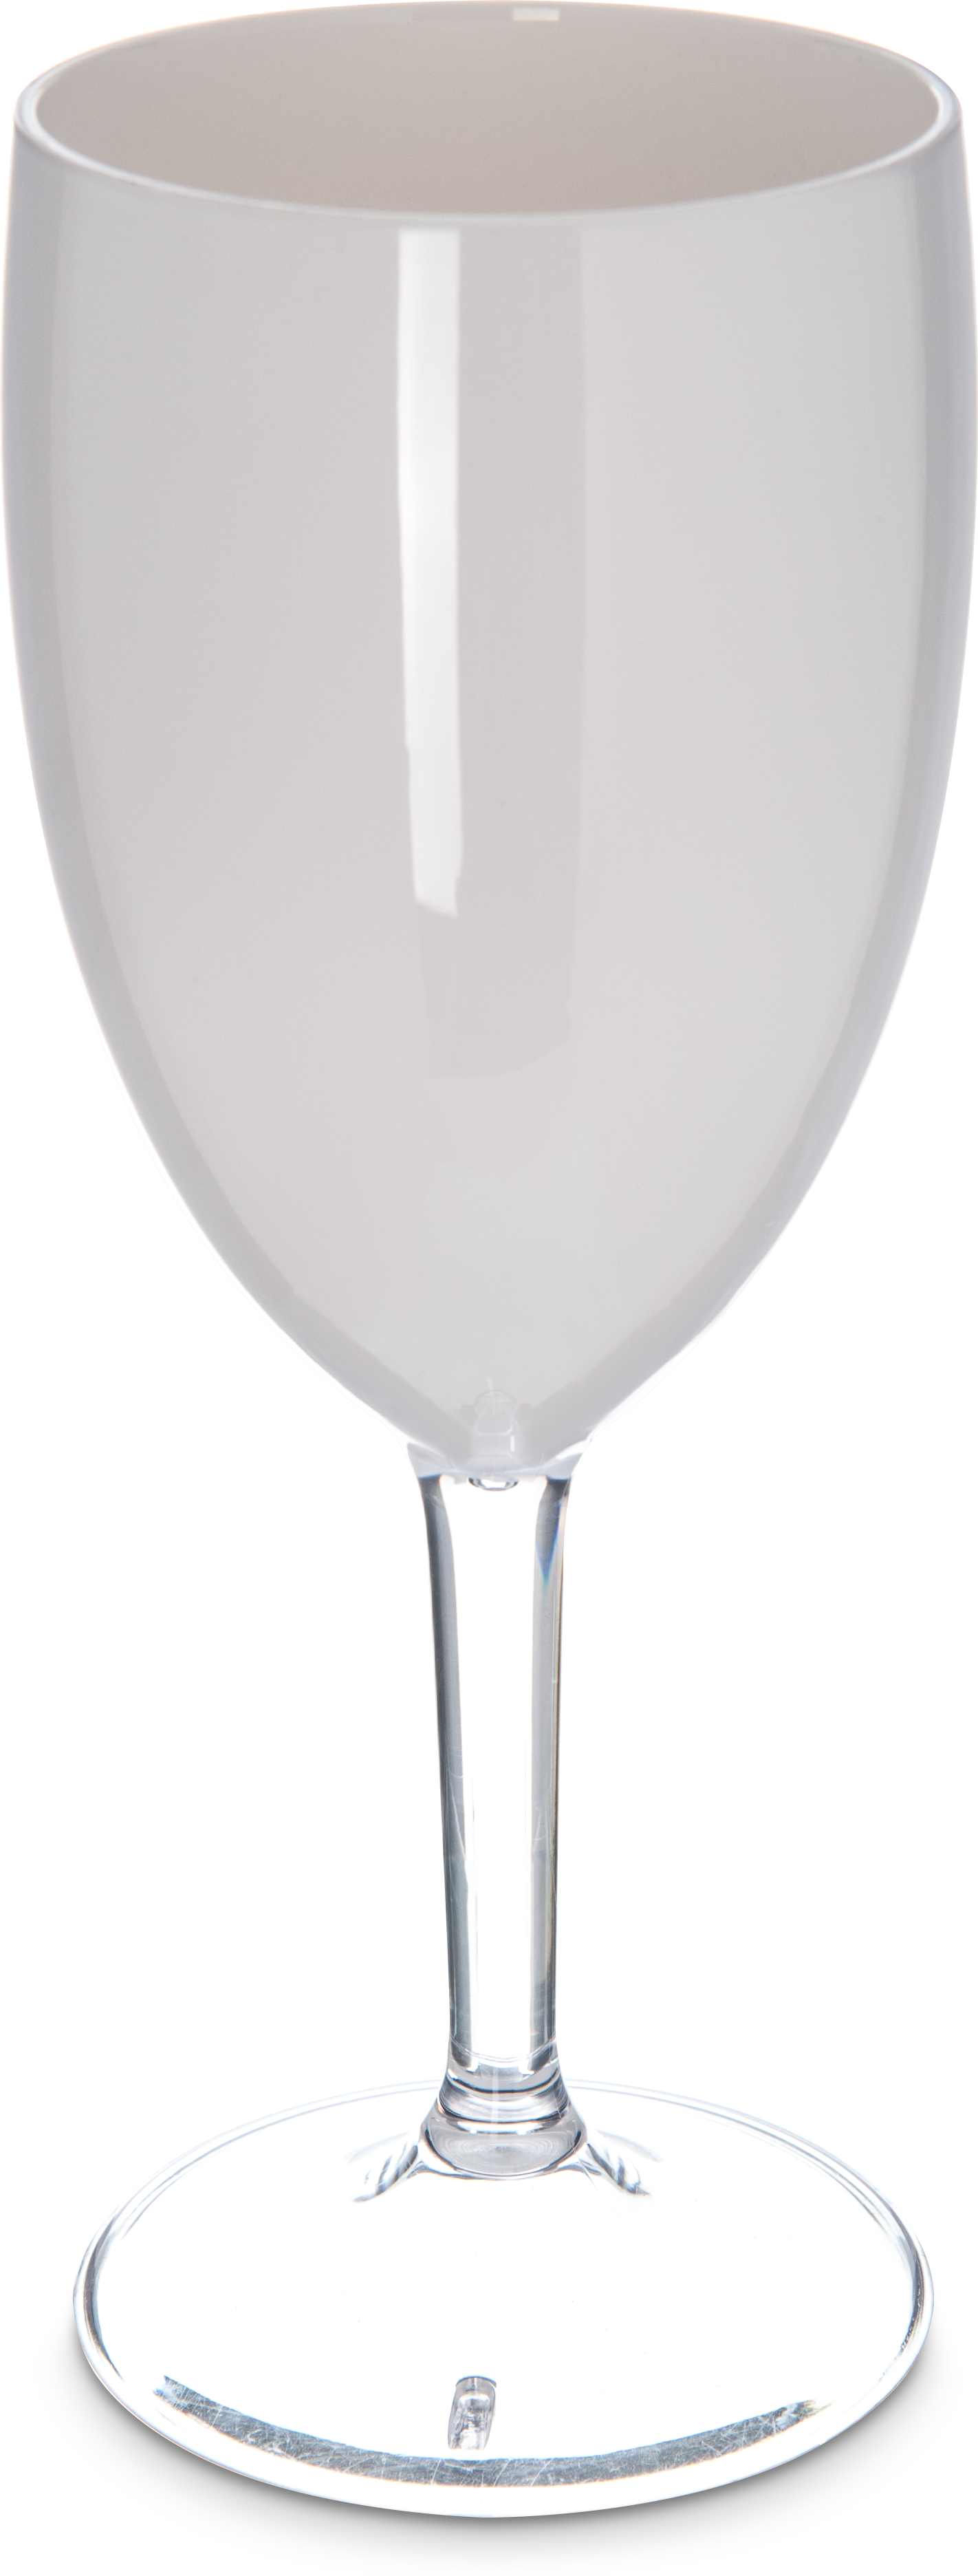 Epicure Cased Wine Goblet 12 oz - White